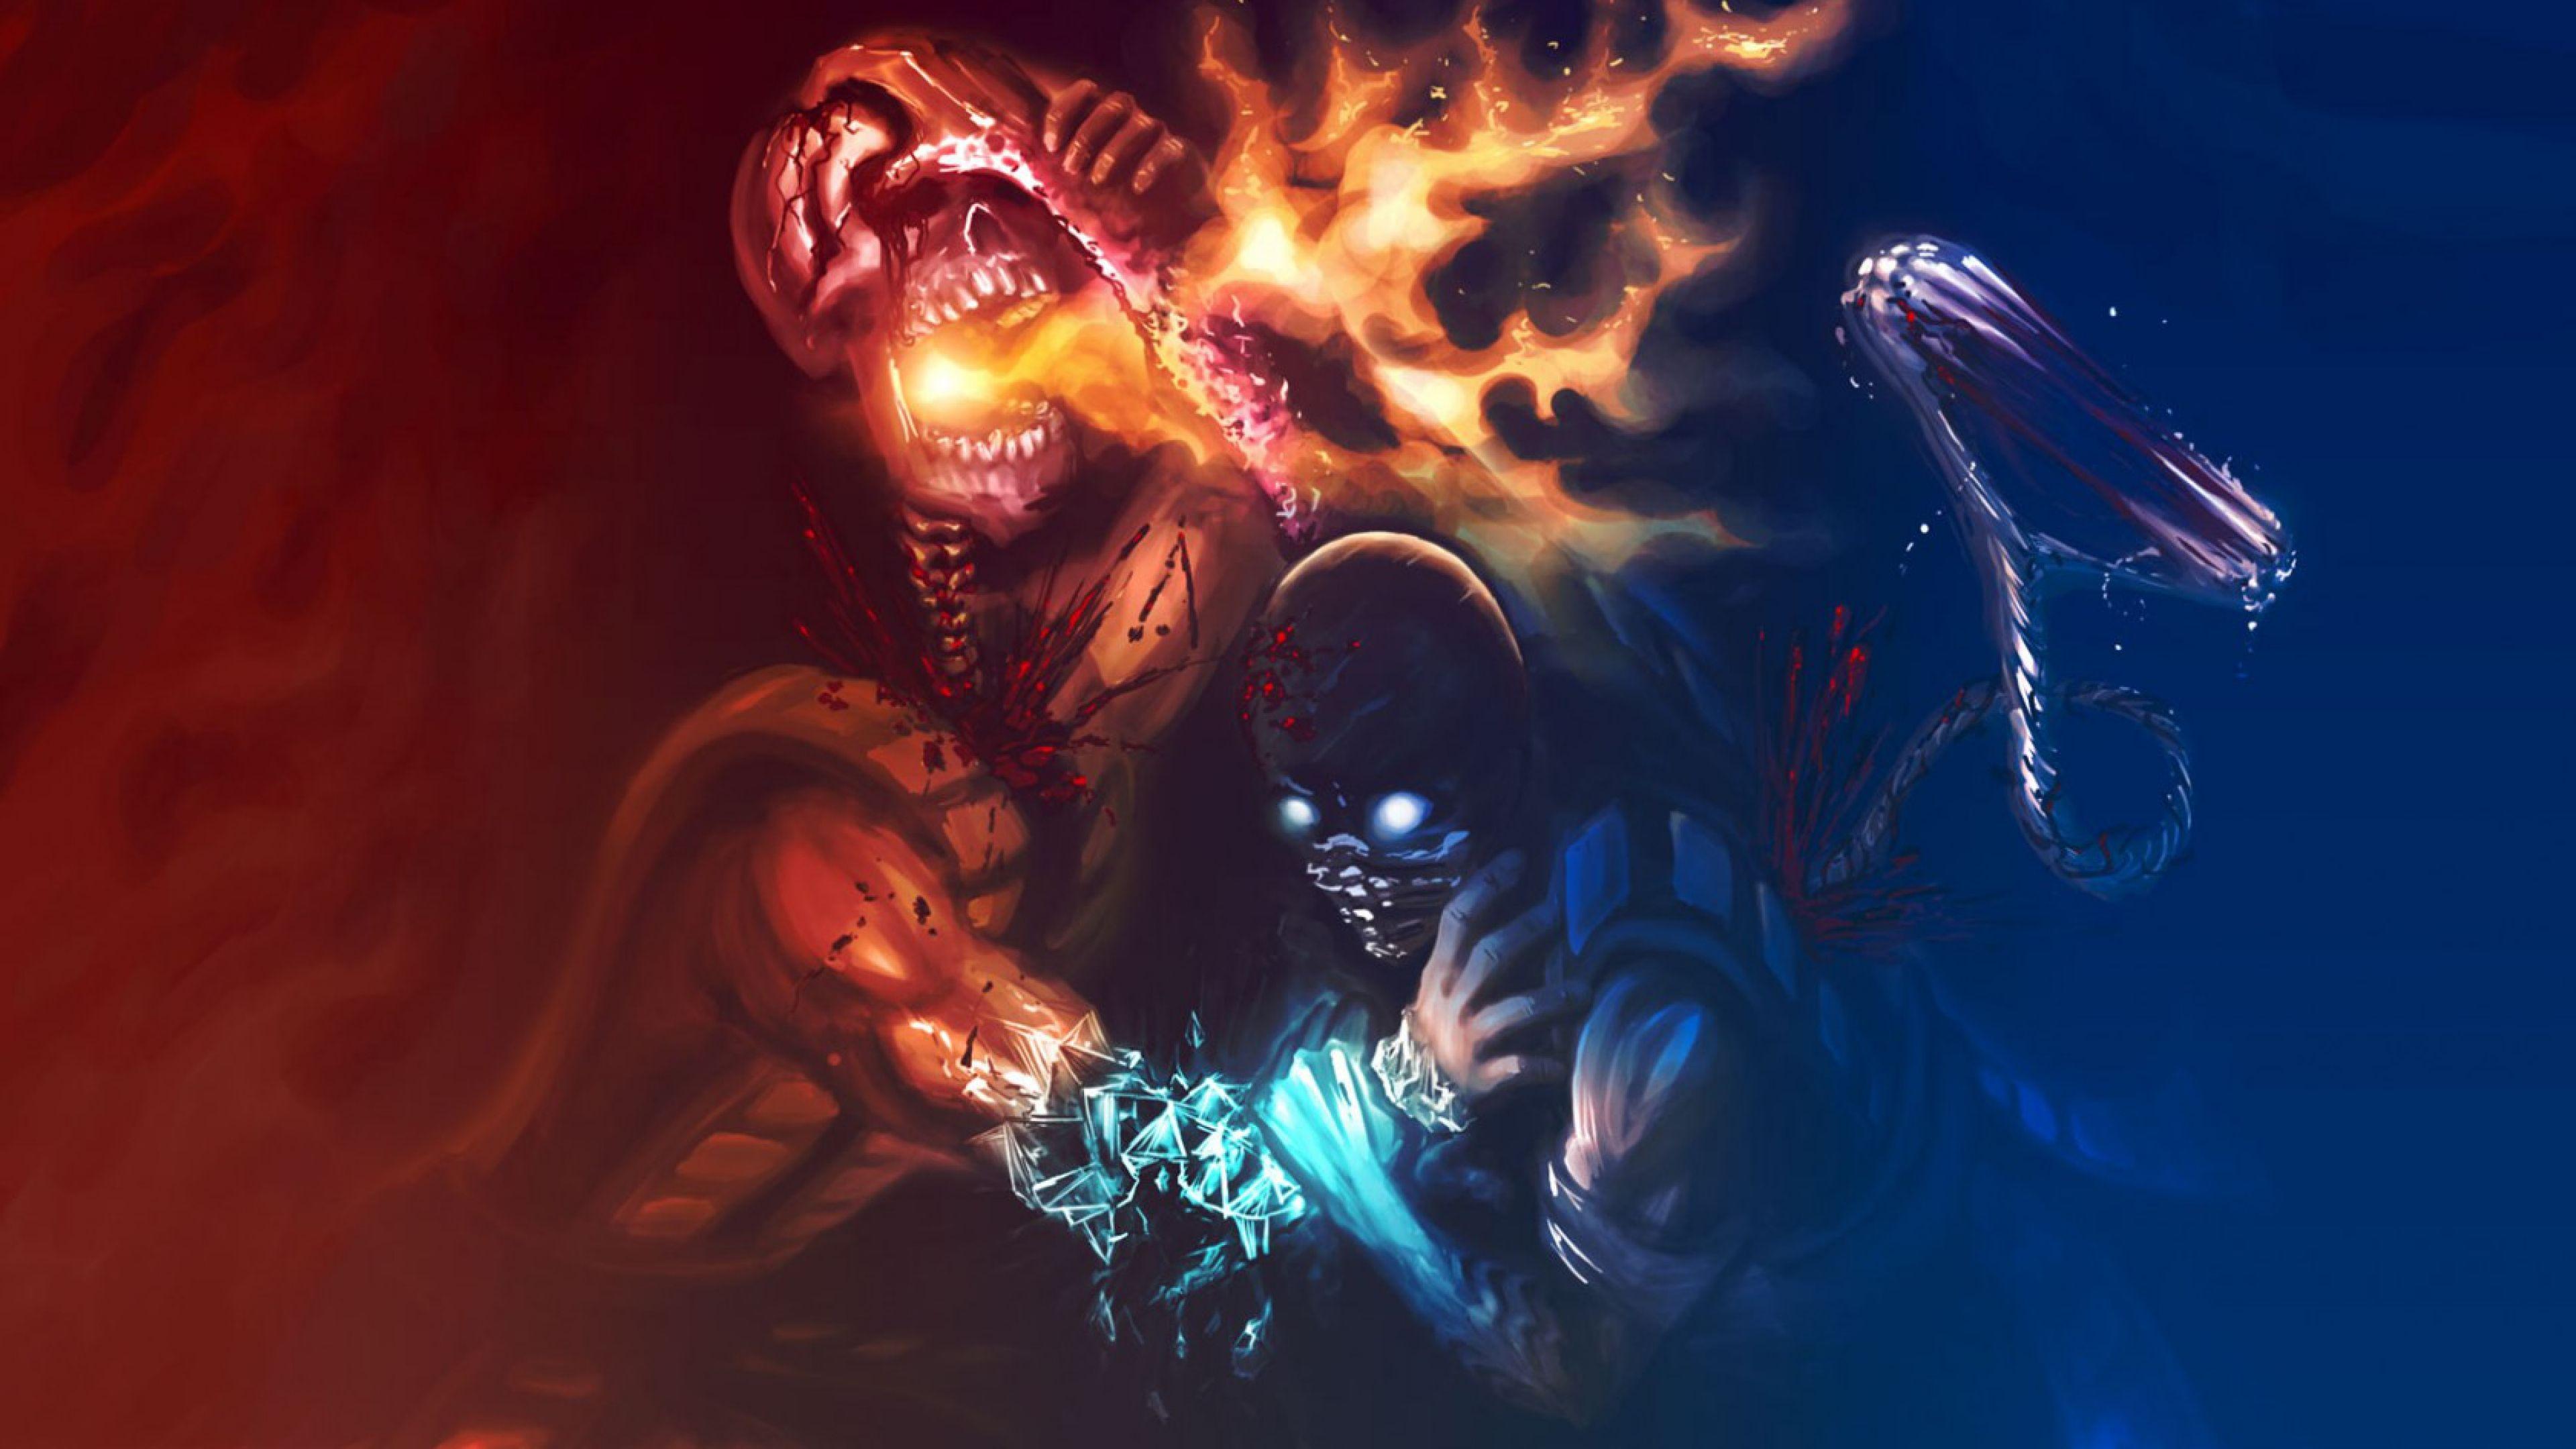 Mortal Kombat Scorpion Vs Sub Zero Wallpapers - Wallpaper Cave